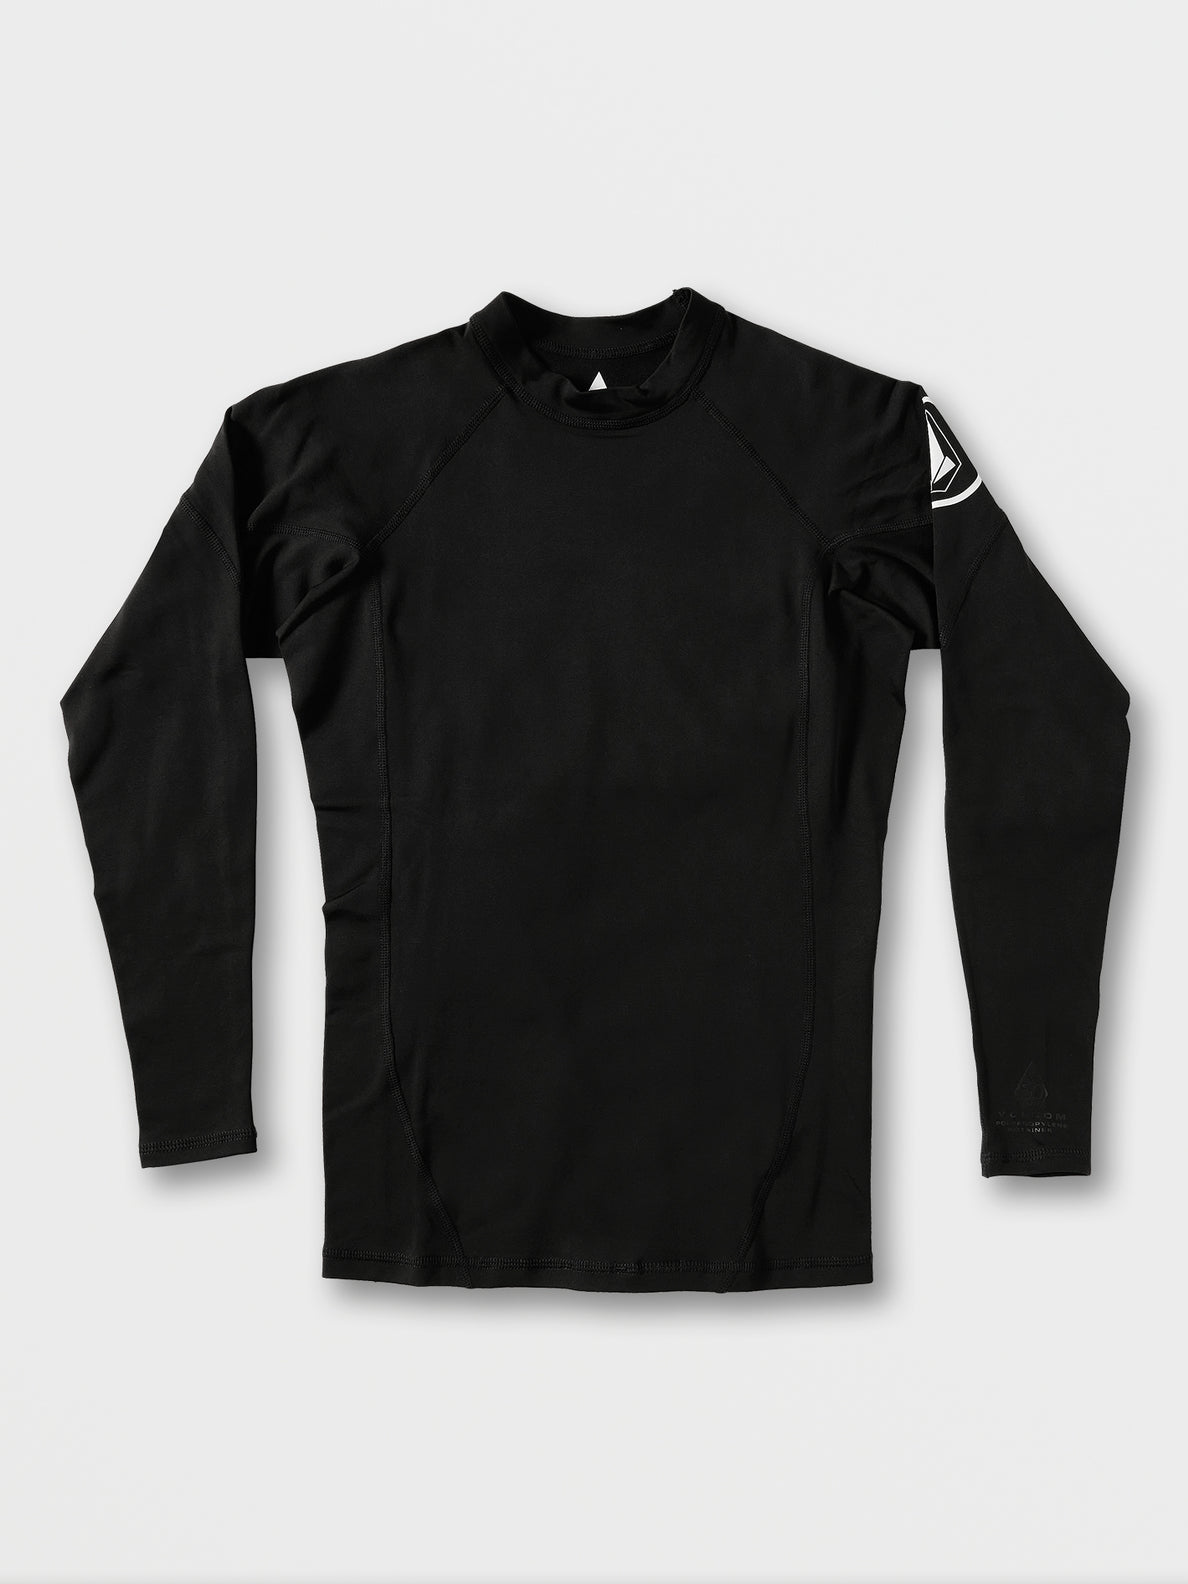 Hotainer Long Sleeve Shirt - Black (A9312303_BLK) [F]